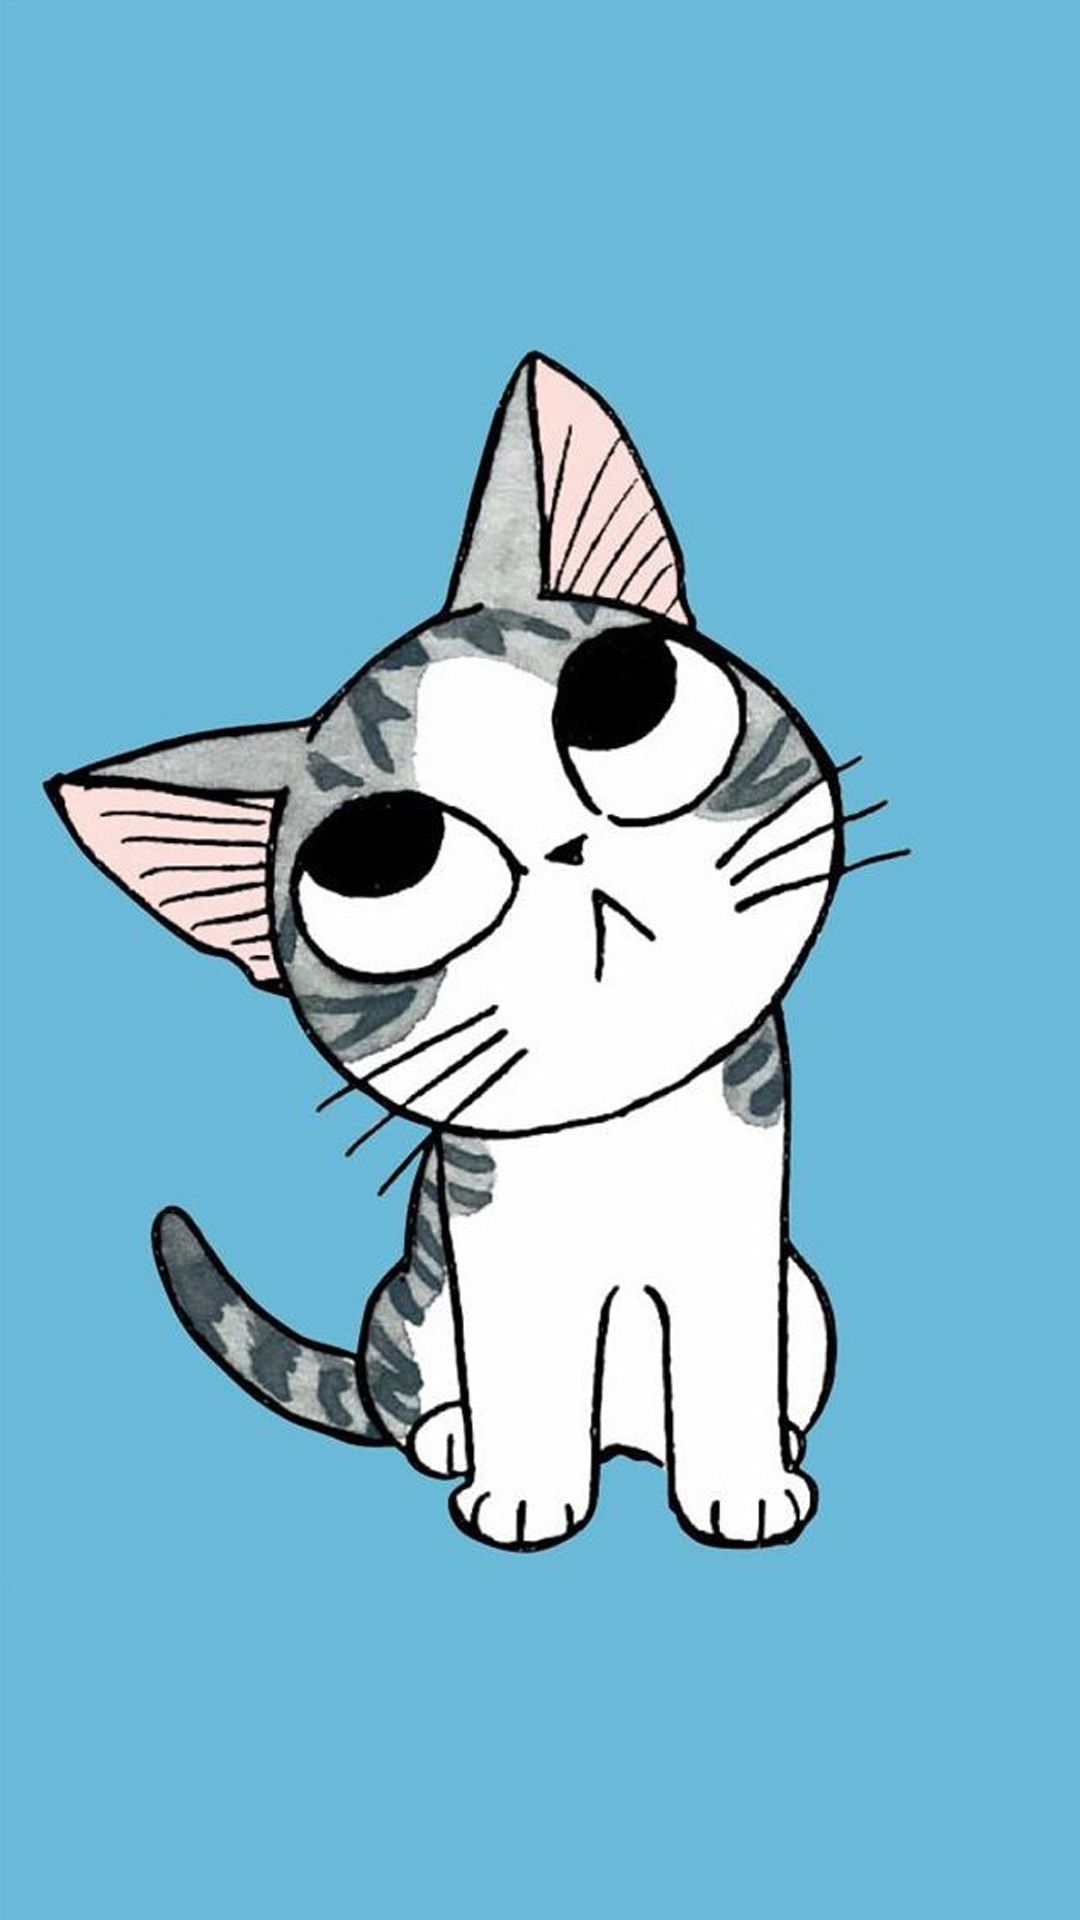 Cute Cartoon Kitten iPhone 6 Wallpaper Download | iPhone ...